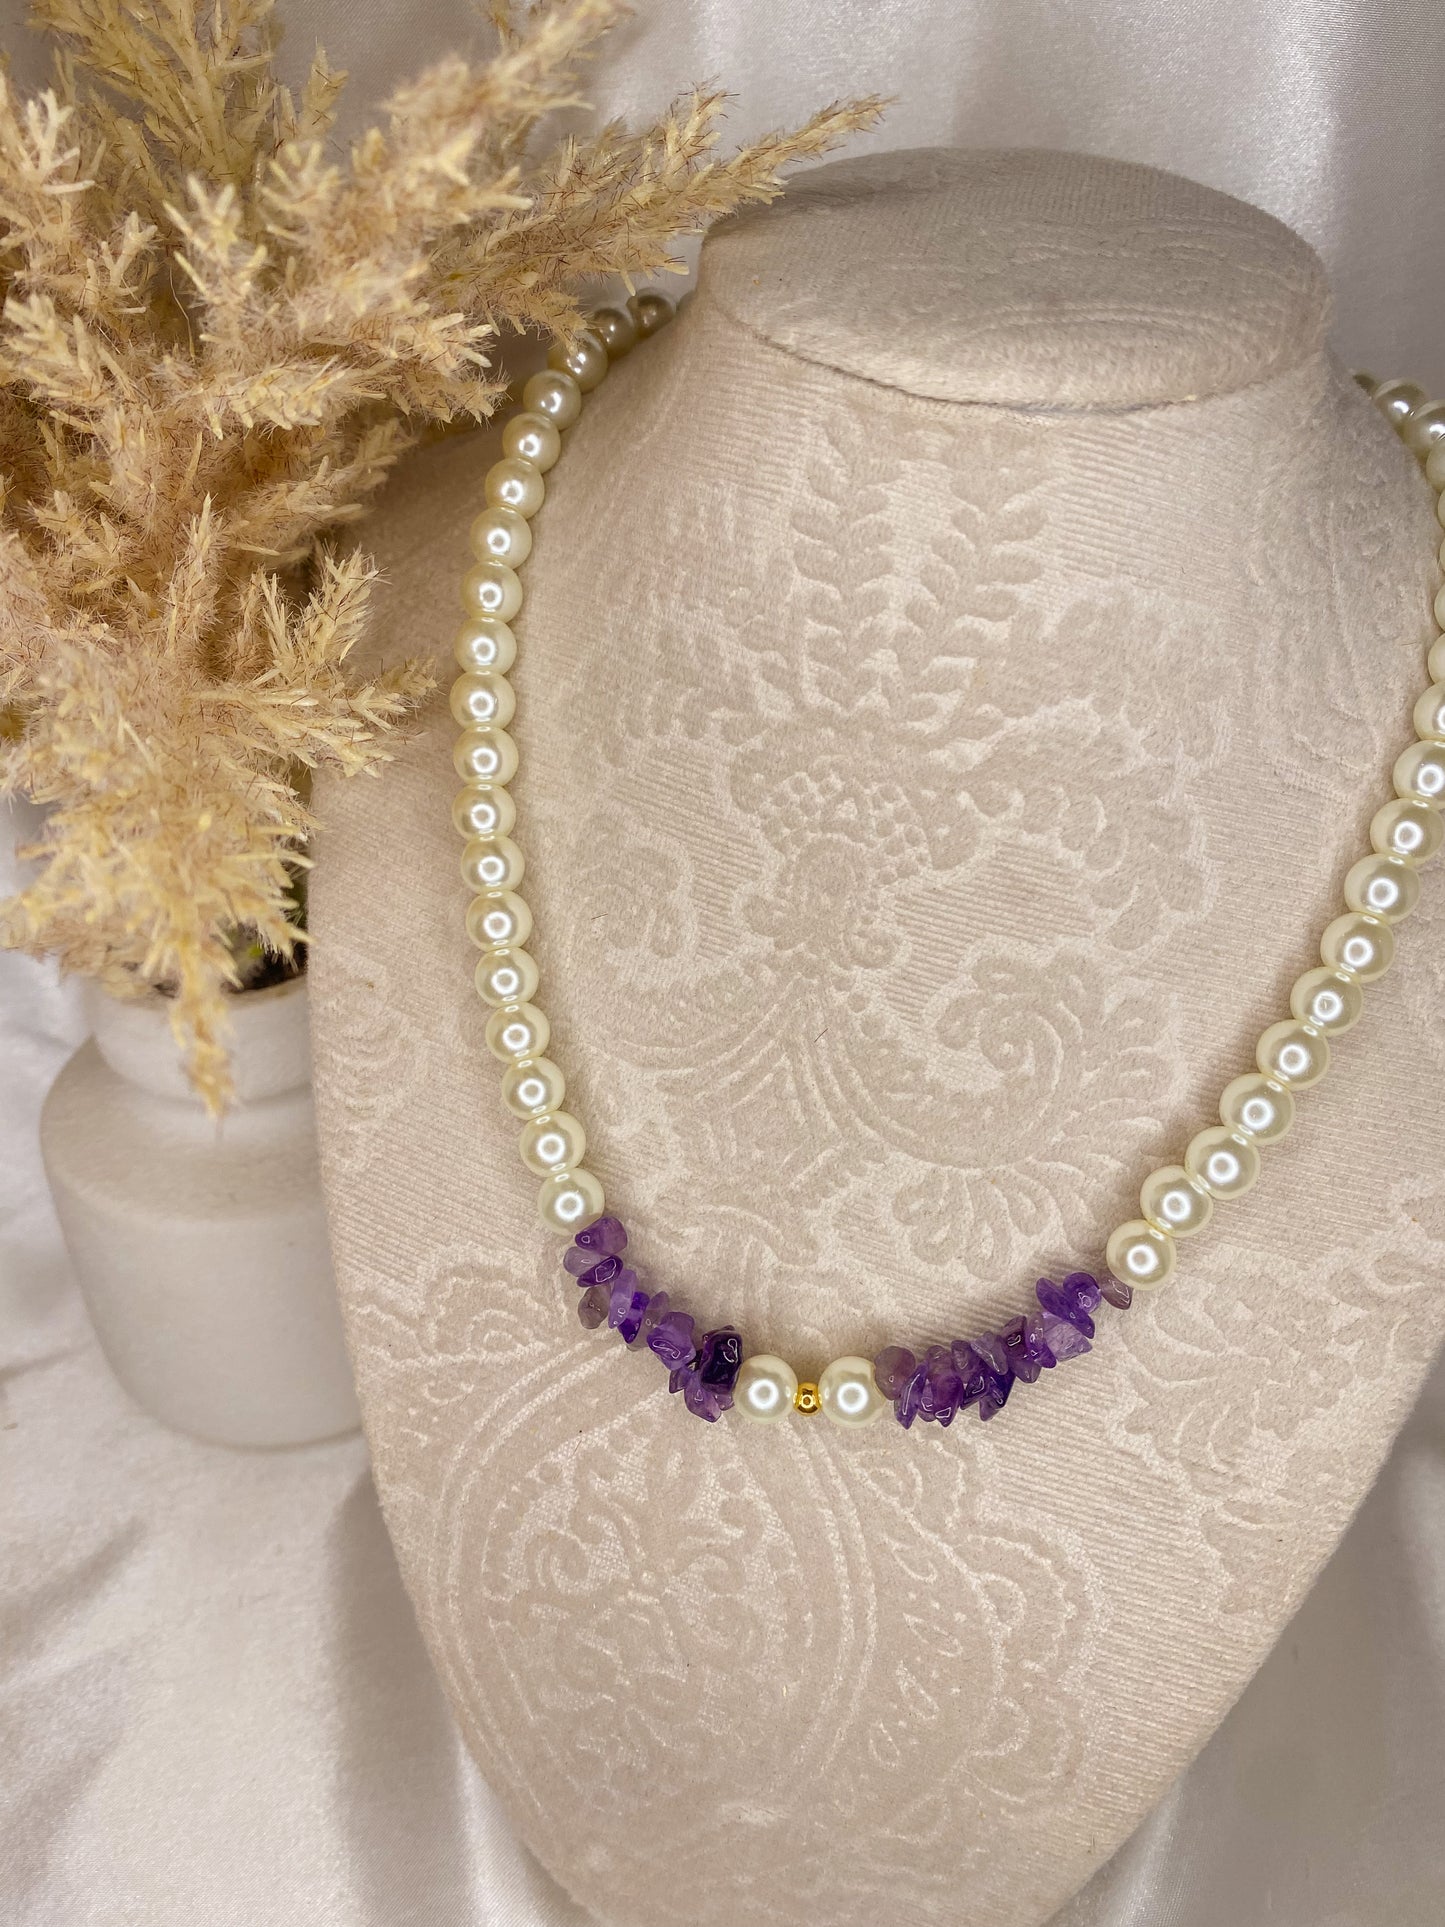 Madre perla necklace